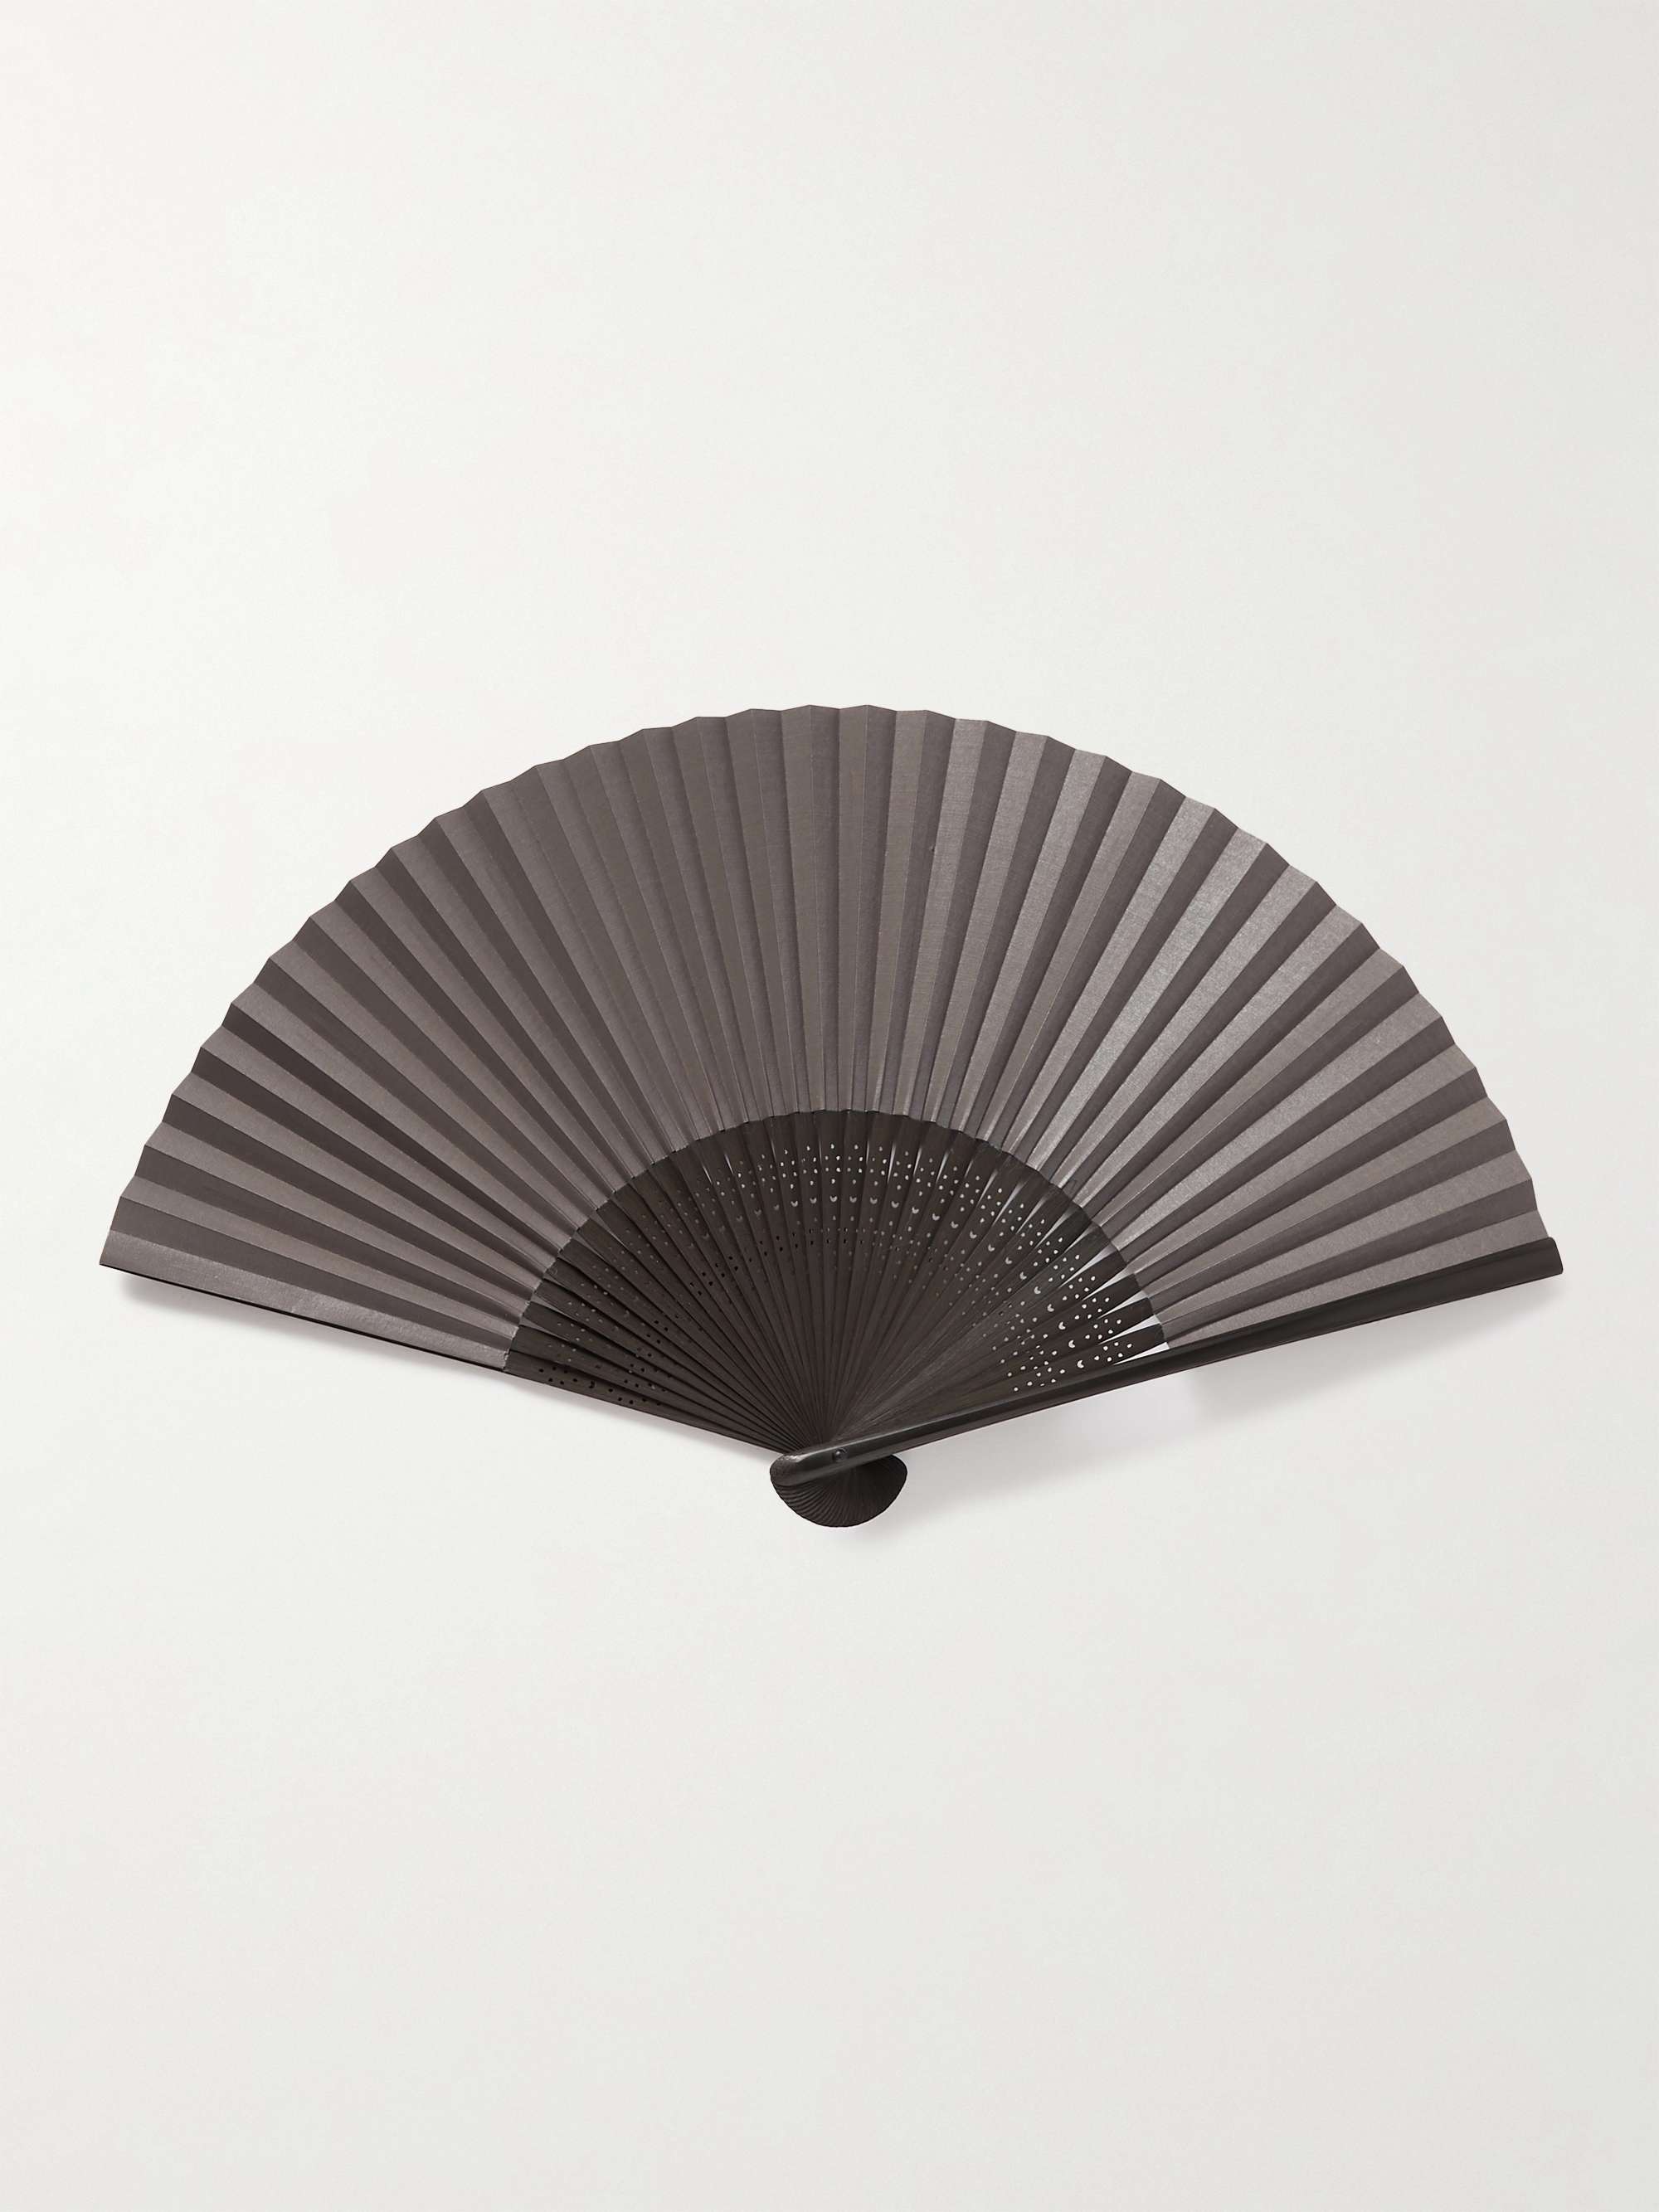 MASTER-PIECE + Onishi Tsune Shoten Camouflage-Print Paper and Bamboo Fan